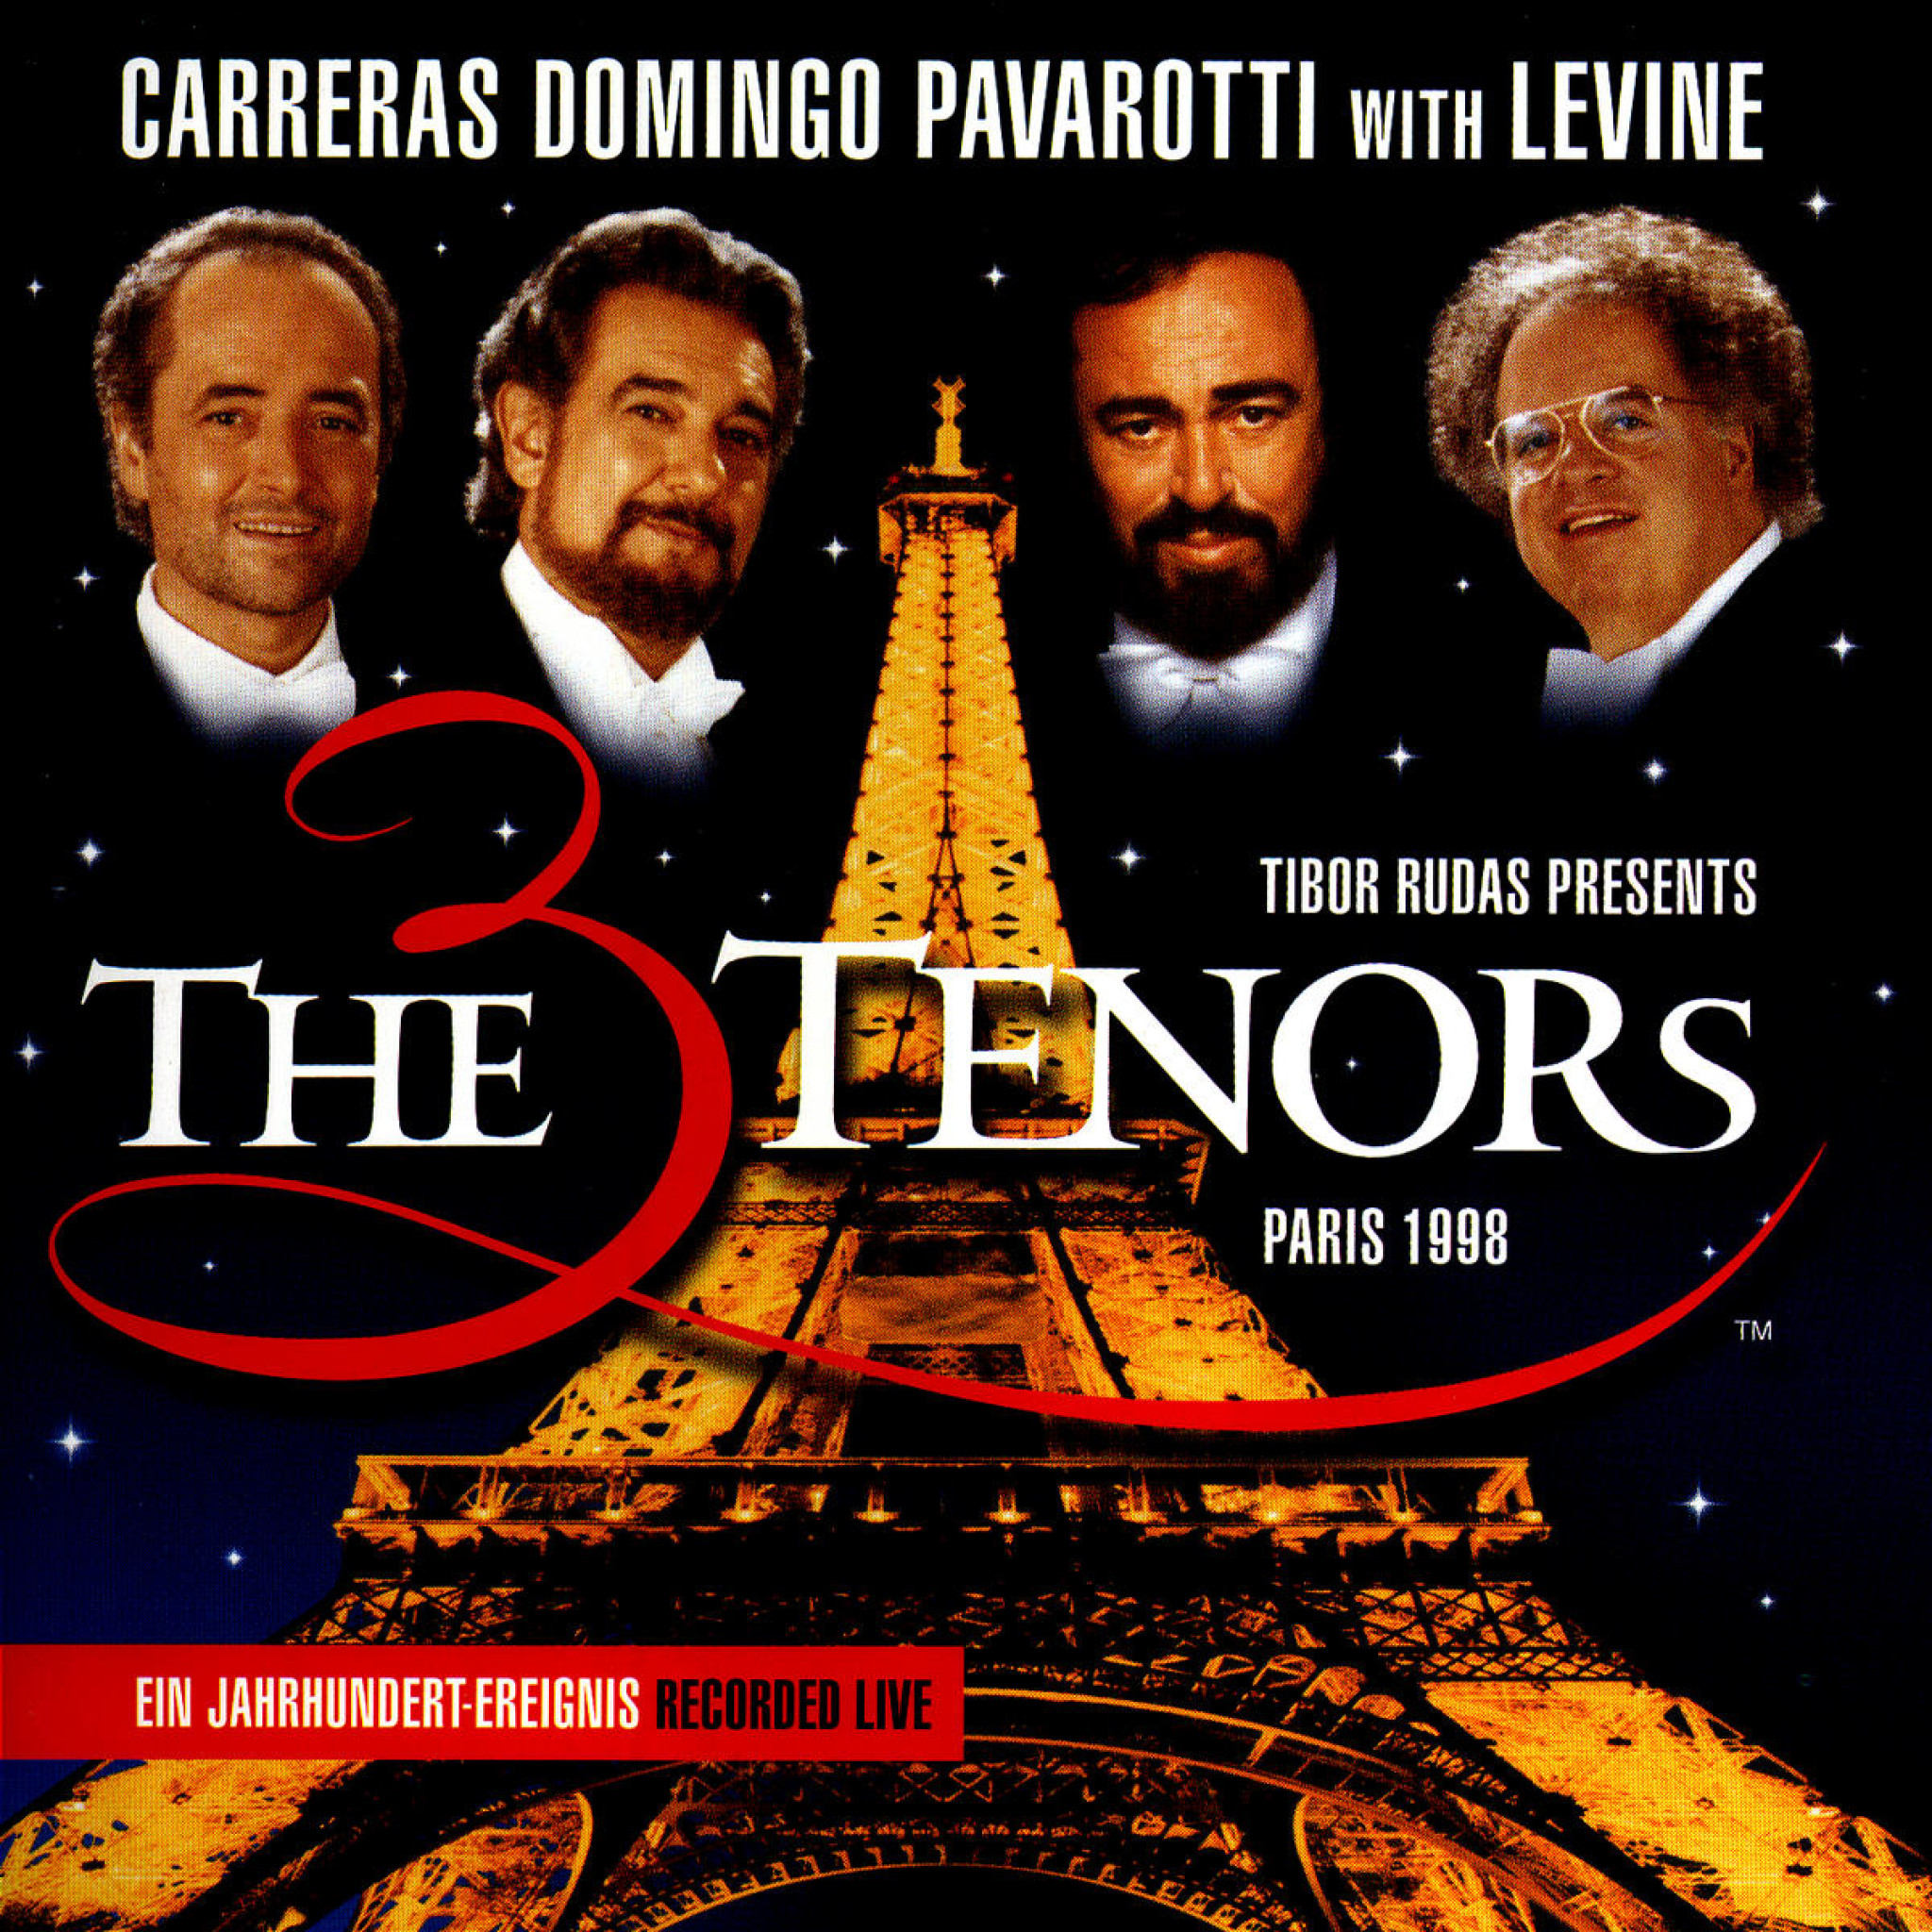 THE THREE TENORS Paris 98